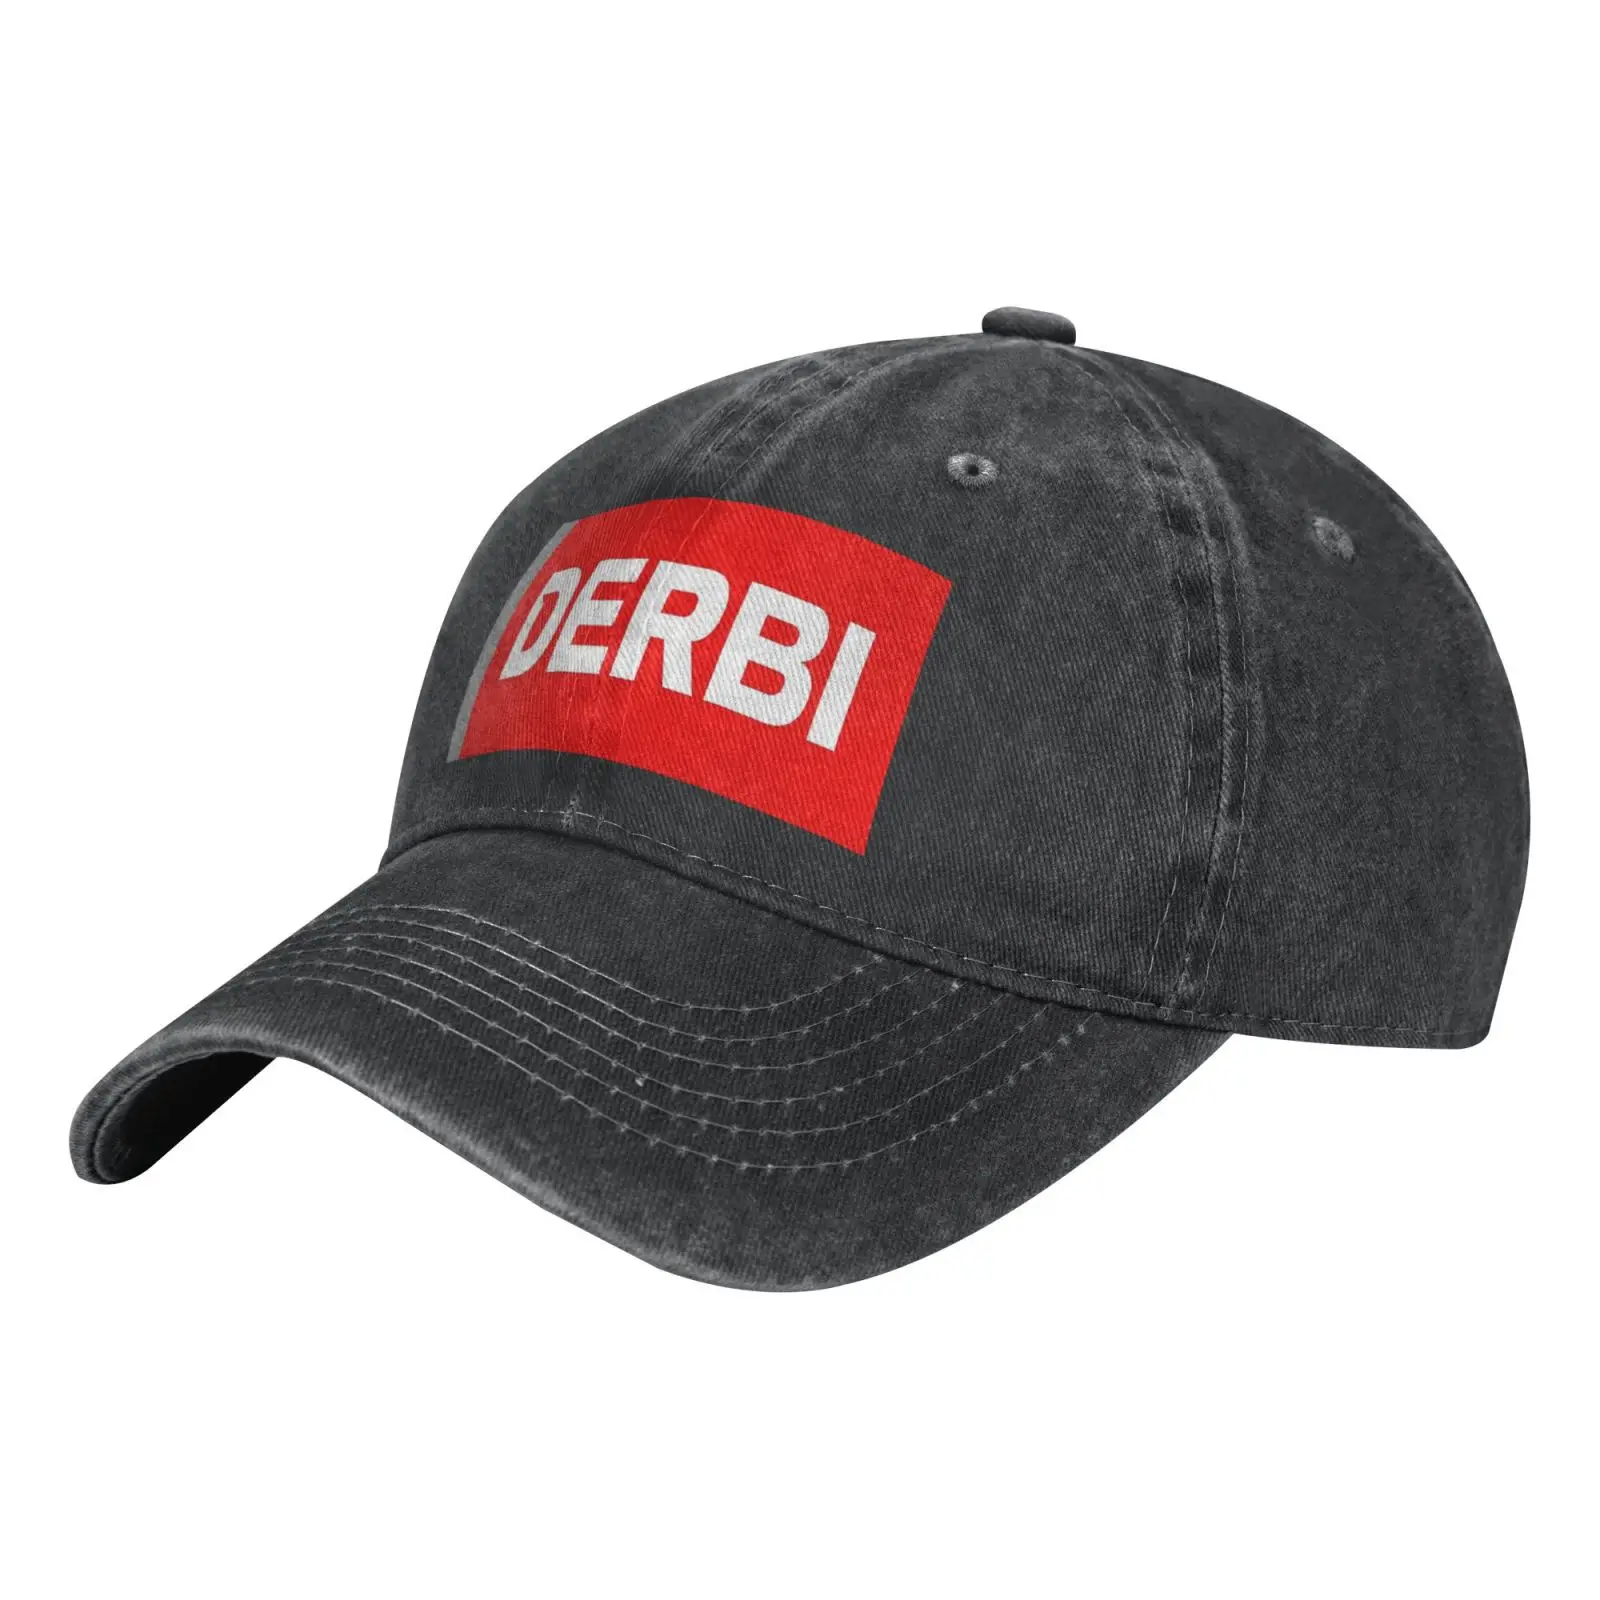 

Кепка Derbi 810, берет, мужские шапки, бейсболка, кепка s, женская шапка, кепки женские, мужские, женские, мужские кепки 2021, модные шапки для мужчин